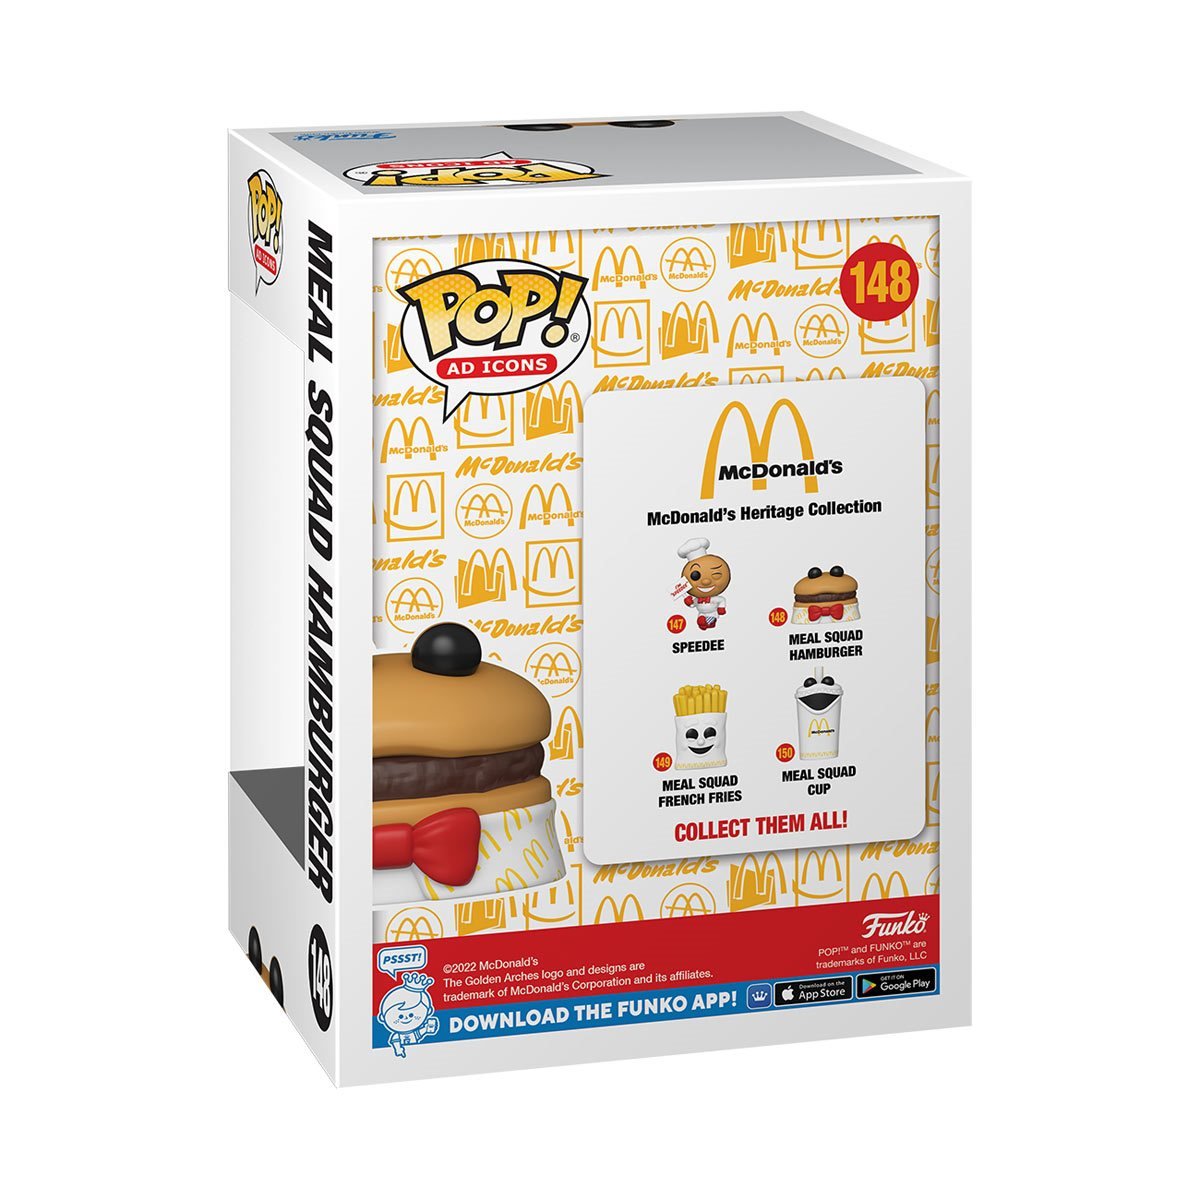 Funko Pop! Officer Mac McDonald's McDonalds Ad Icons Pop IN STOCK